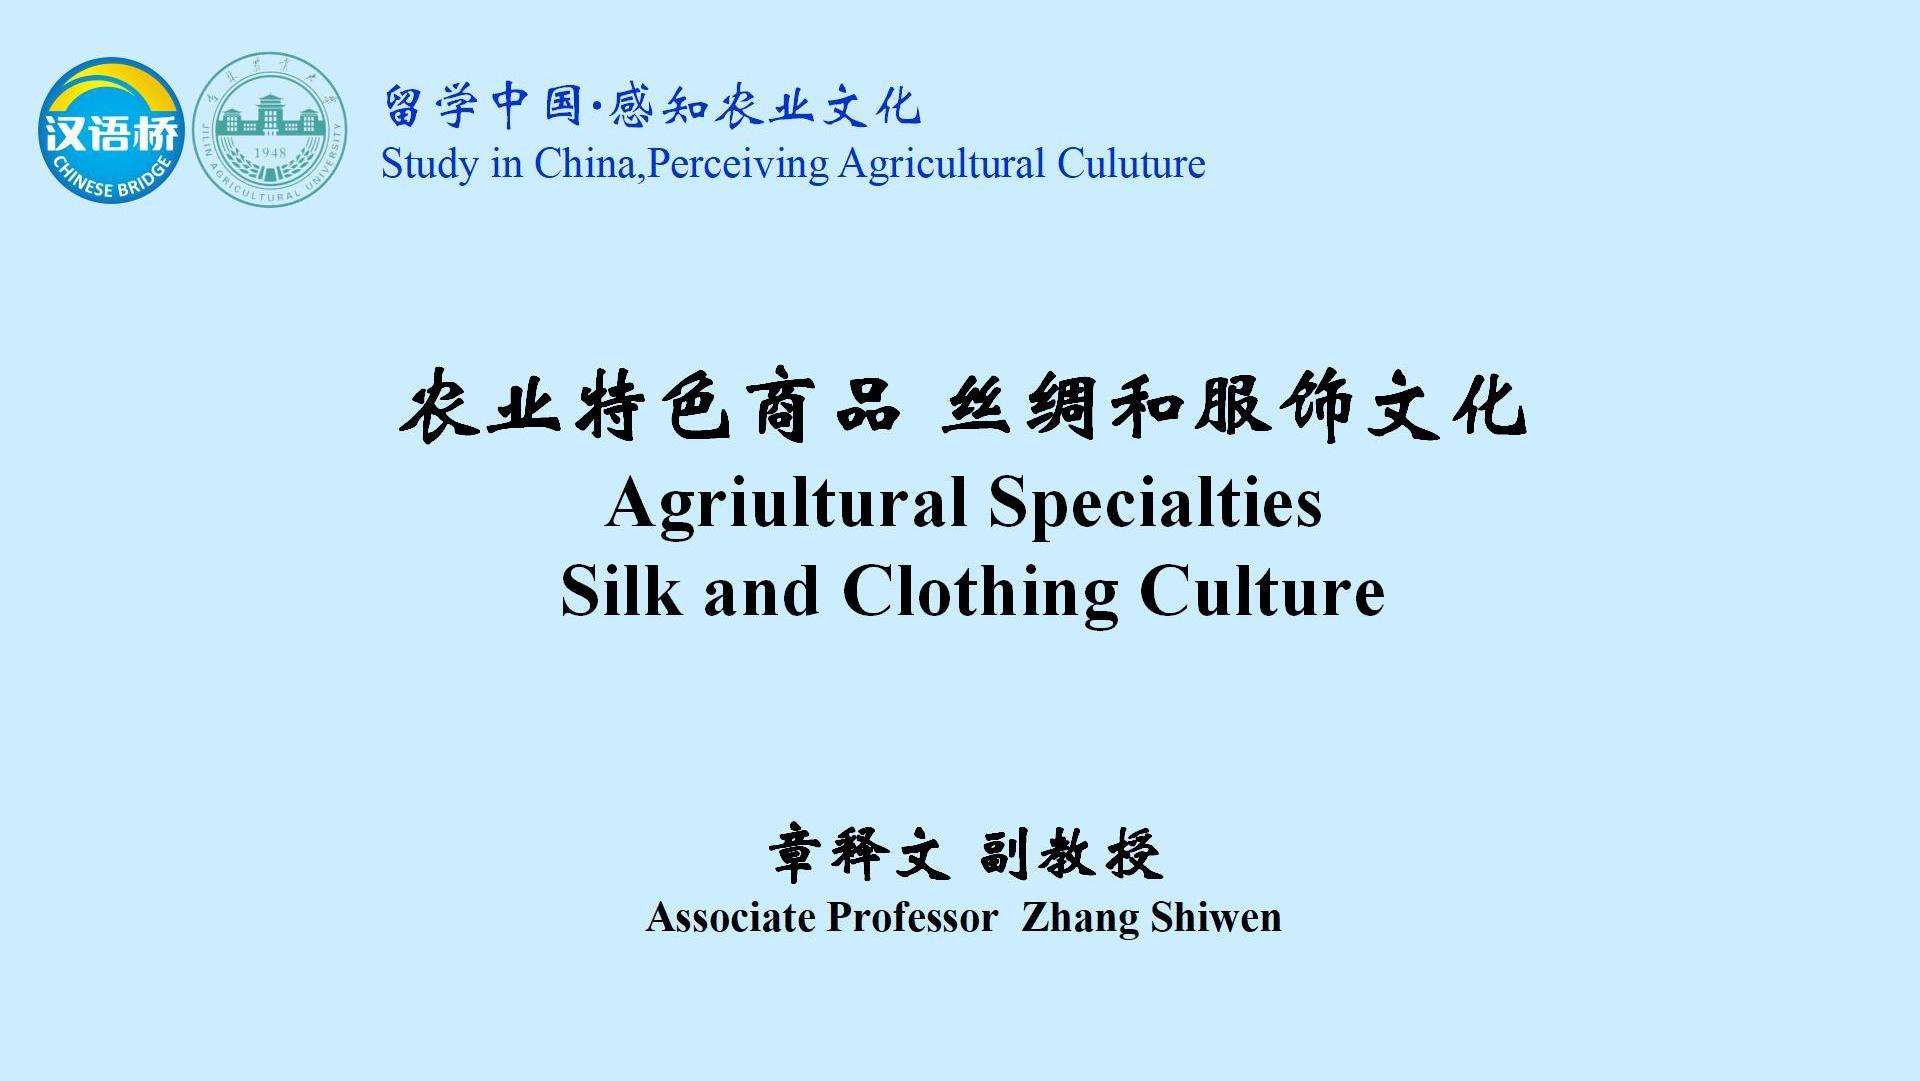 Agricultural Specialties: Silk Culture